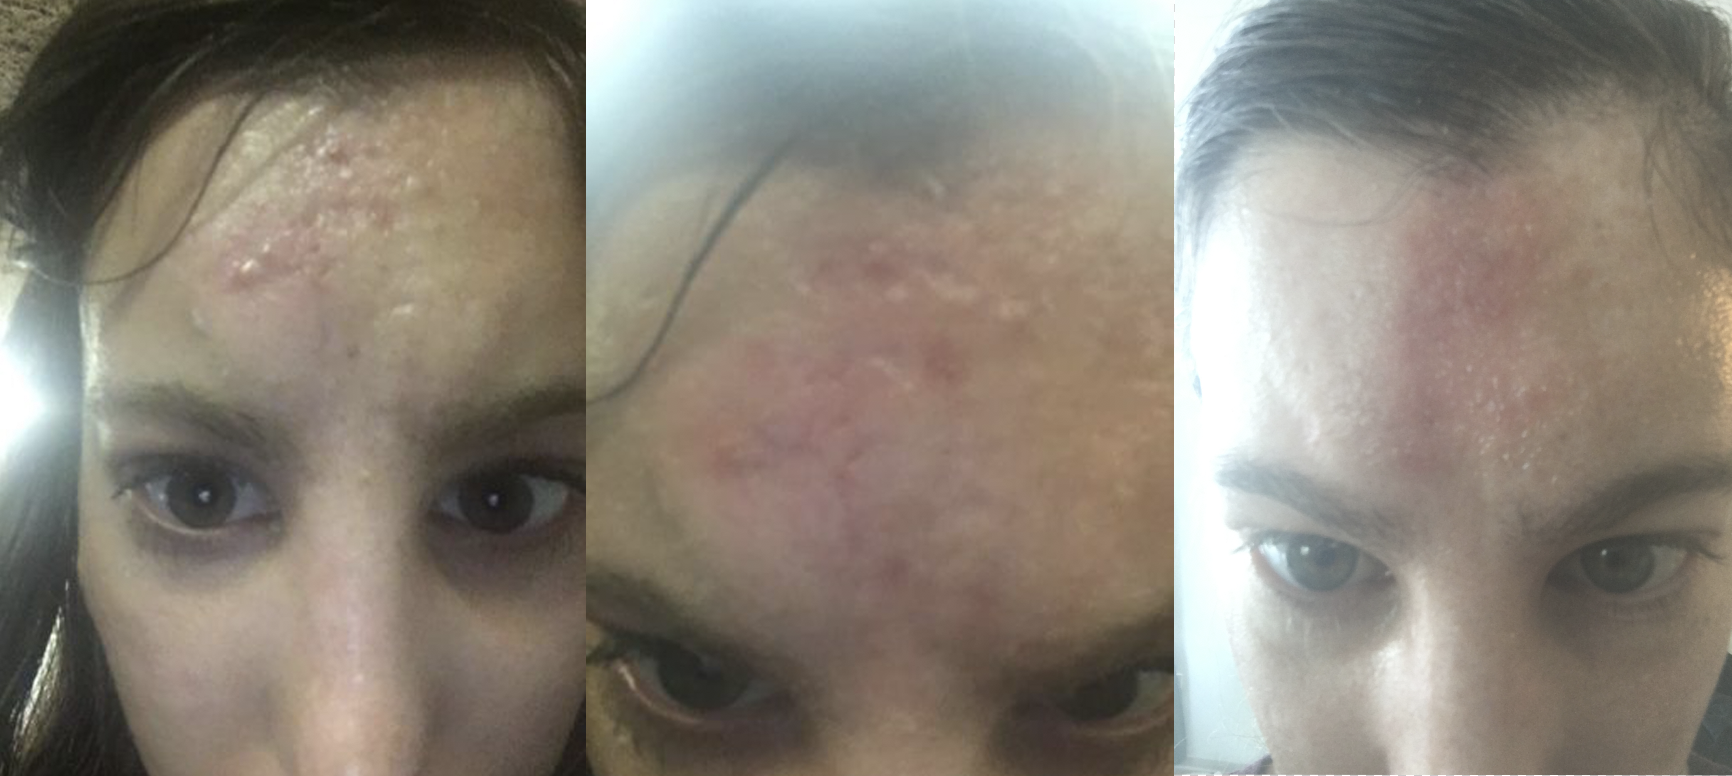 bad acne scars